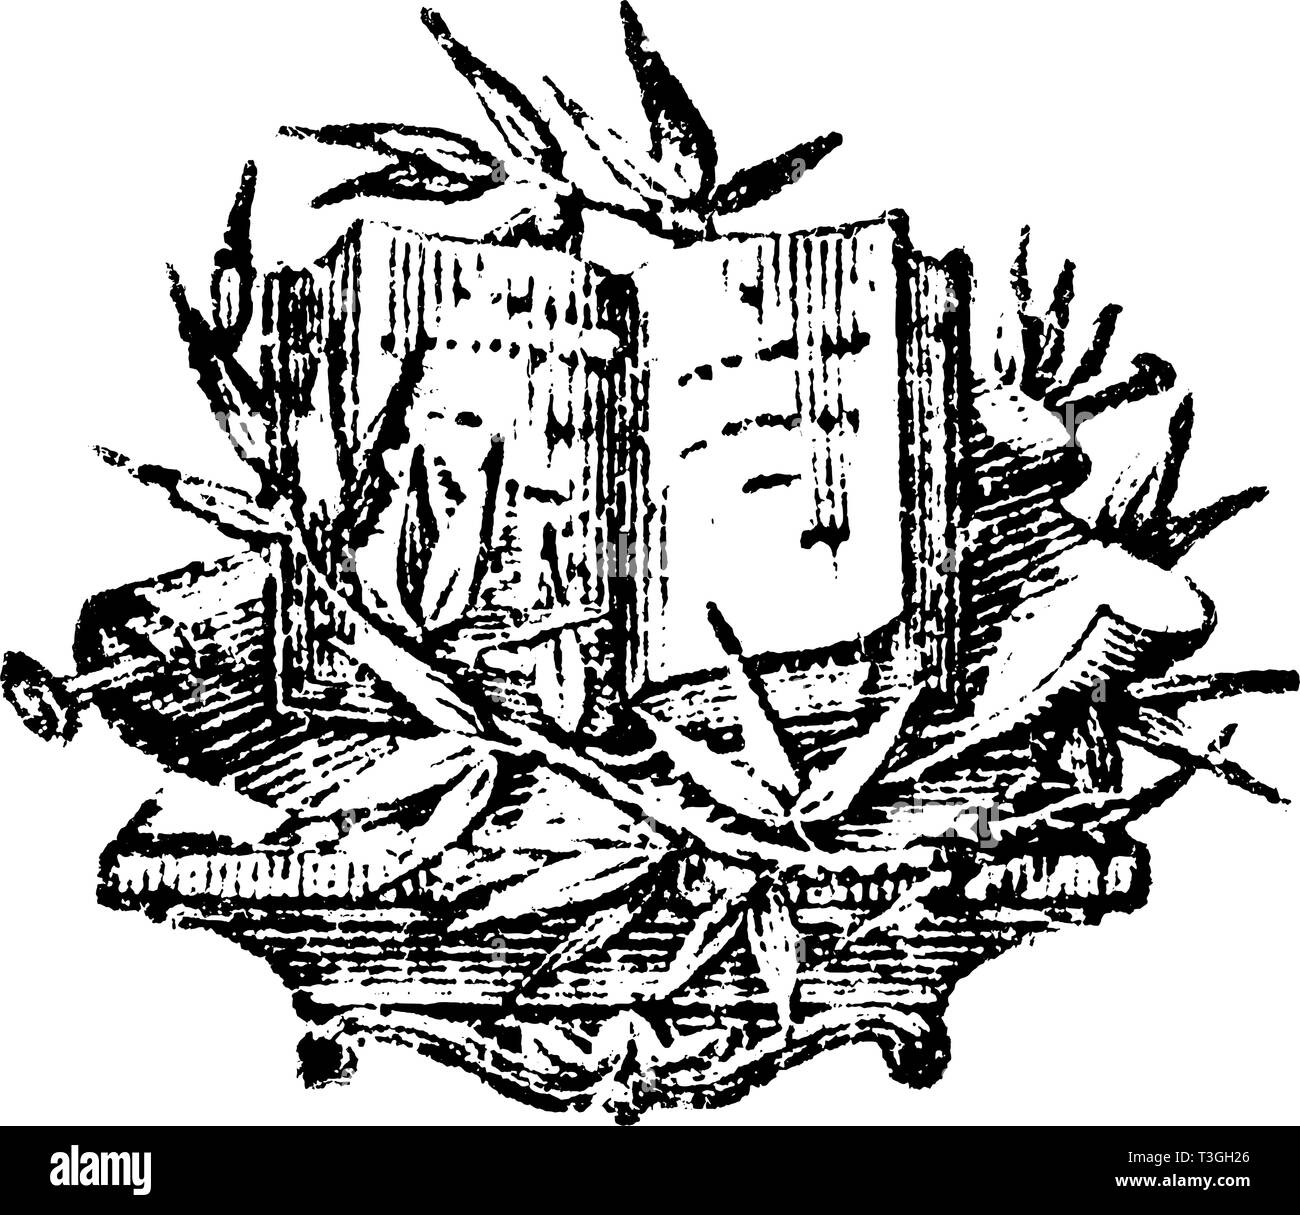 Antique vector drawing or engraving of grunge vintage decorative design of book and scrolls with floral ornament around.From Der neugepflansste kleine Baum-Garten, 1772. Stock Vector